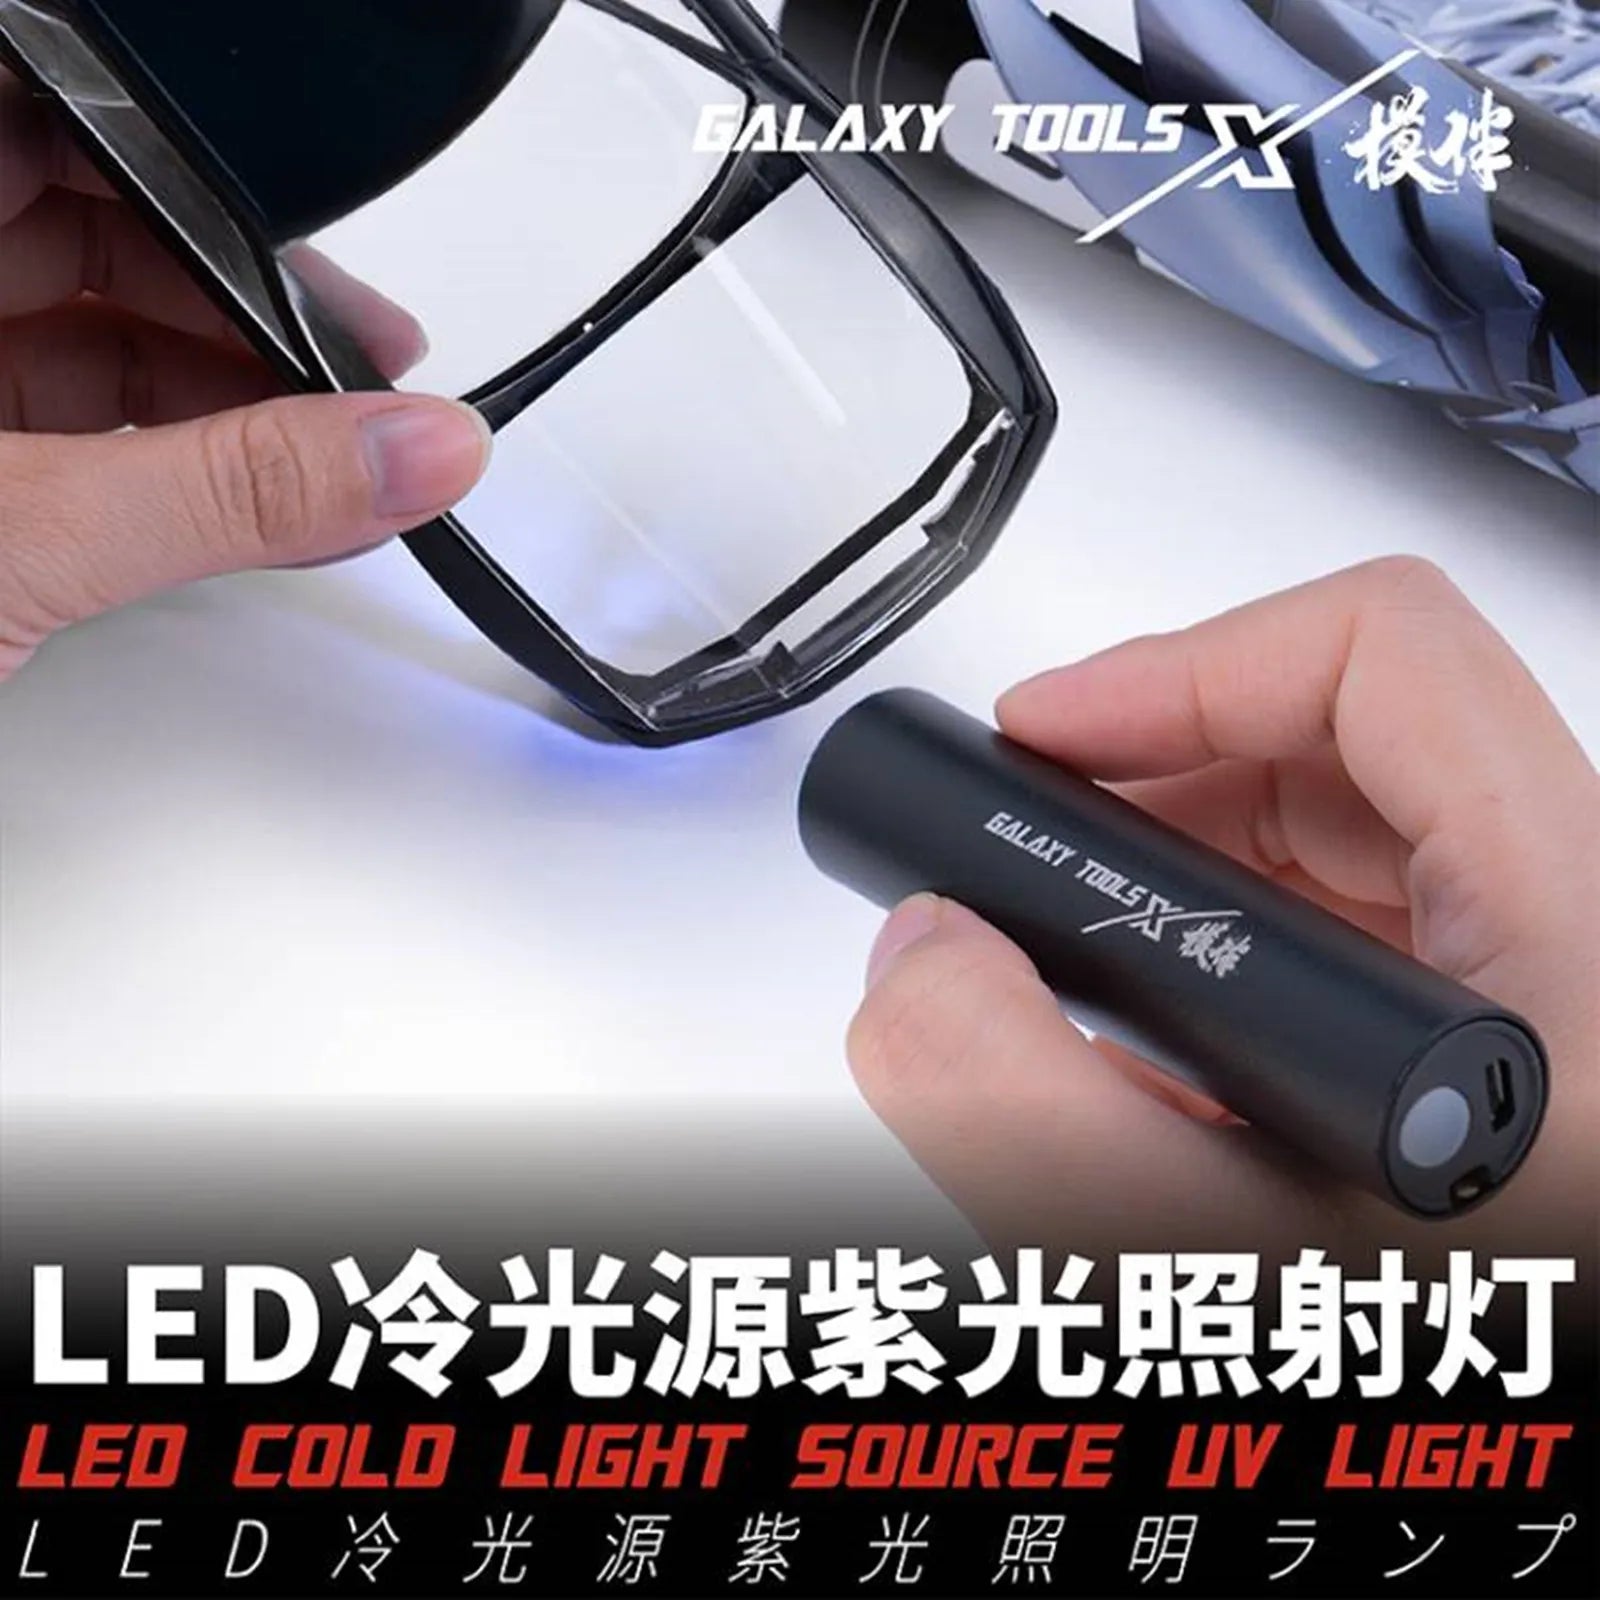 Galaxy Tools LED Cold Light UV Source for Gundam Model Kits - T08B14/15